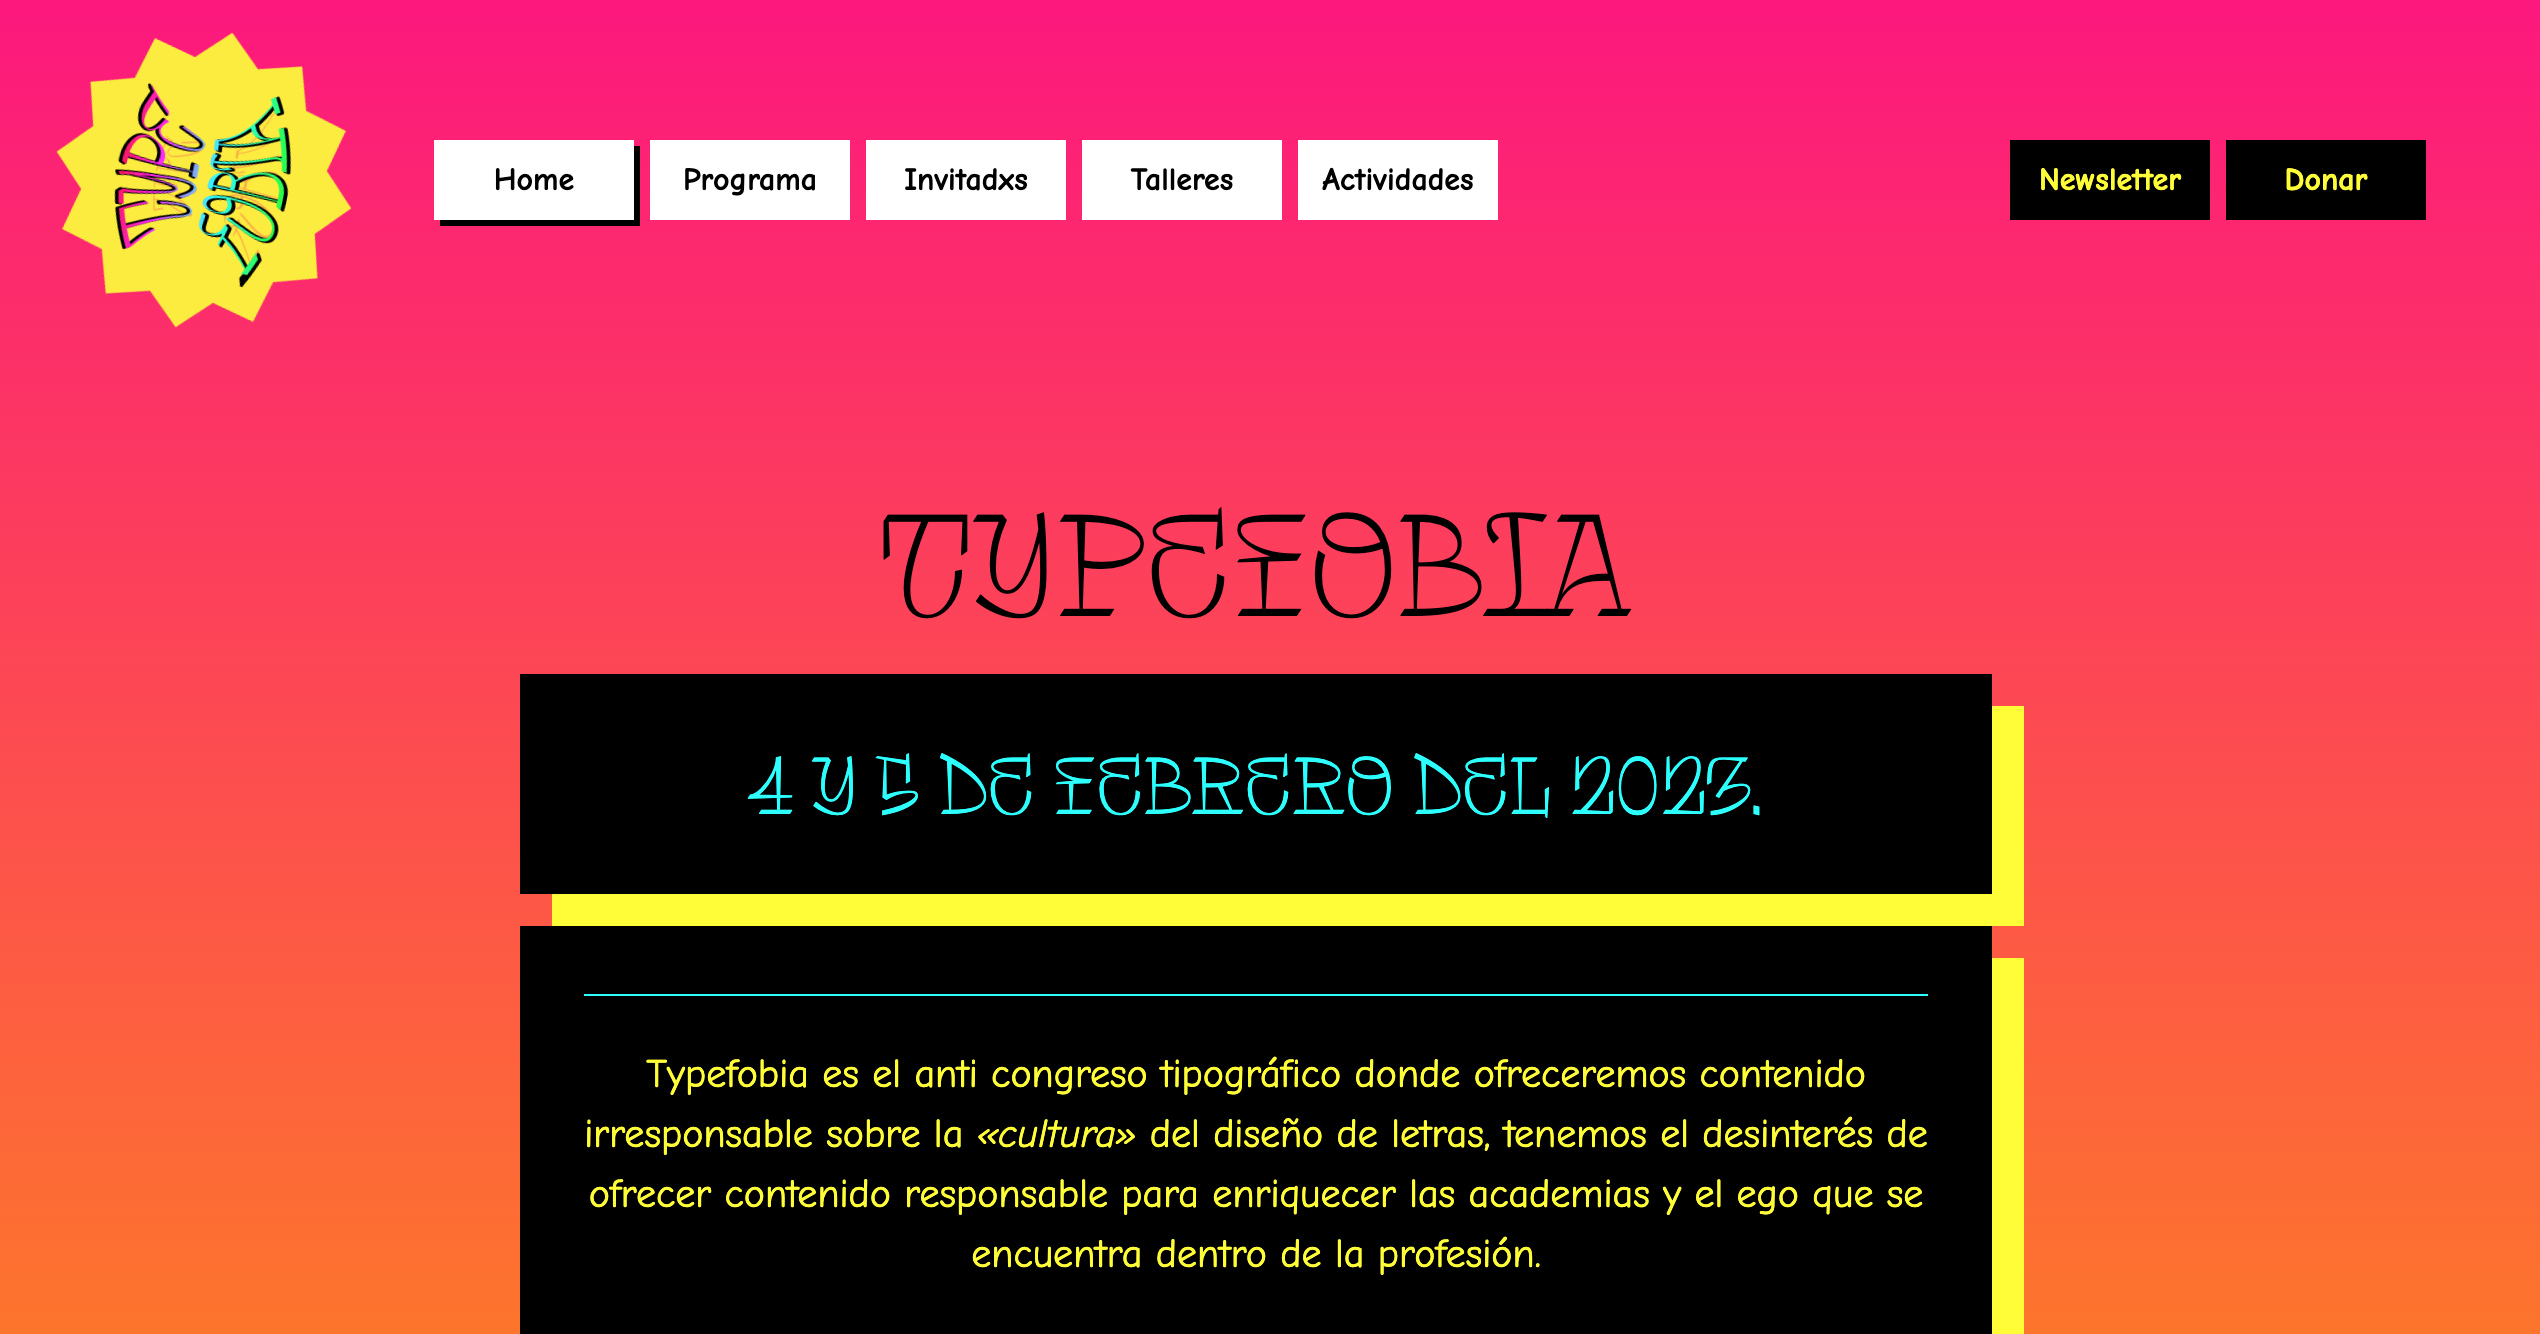 Typofobia website homepage 